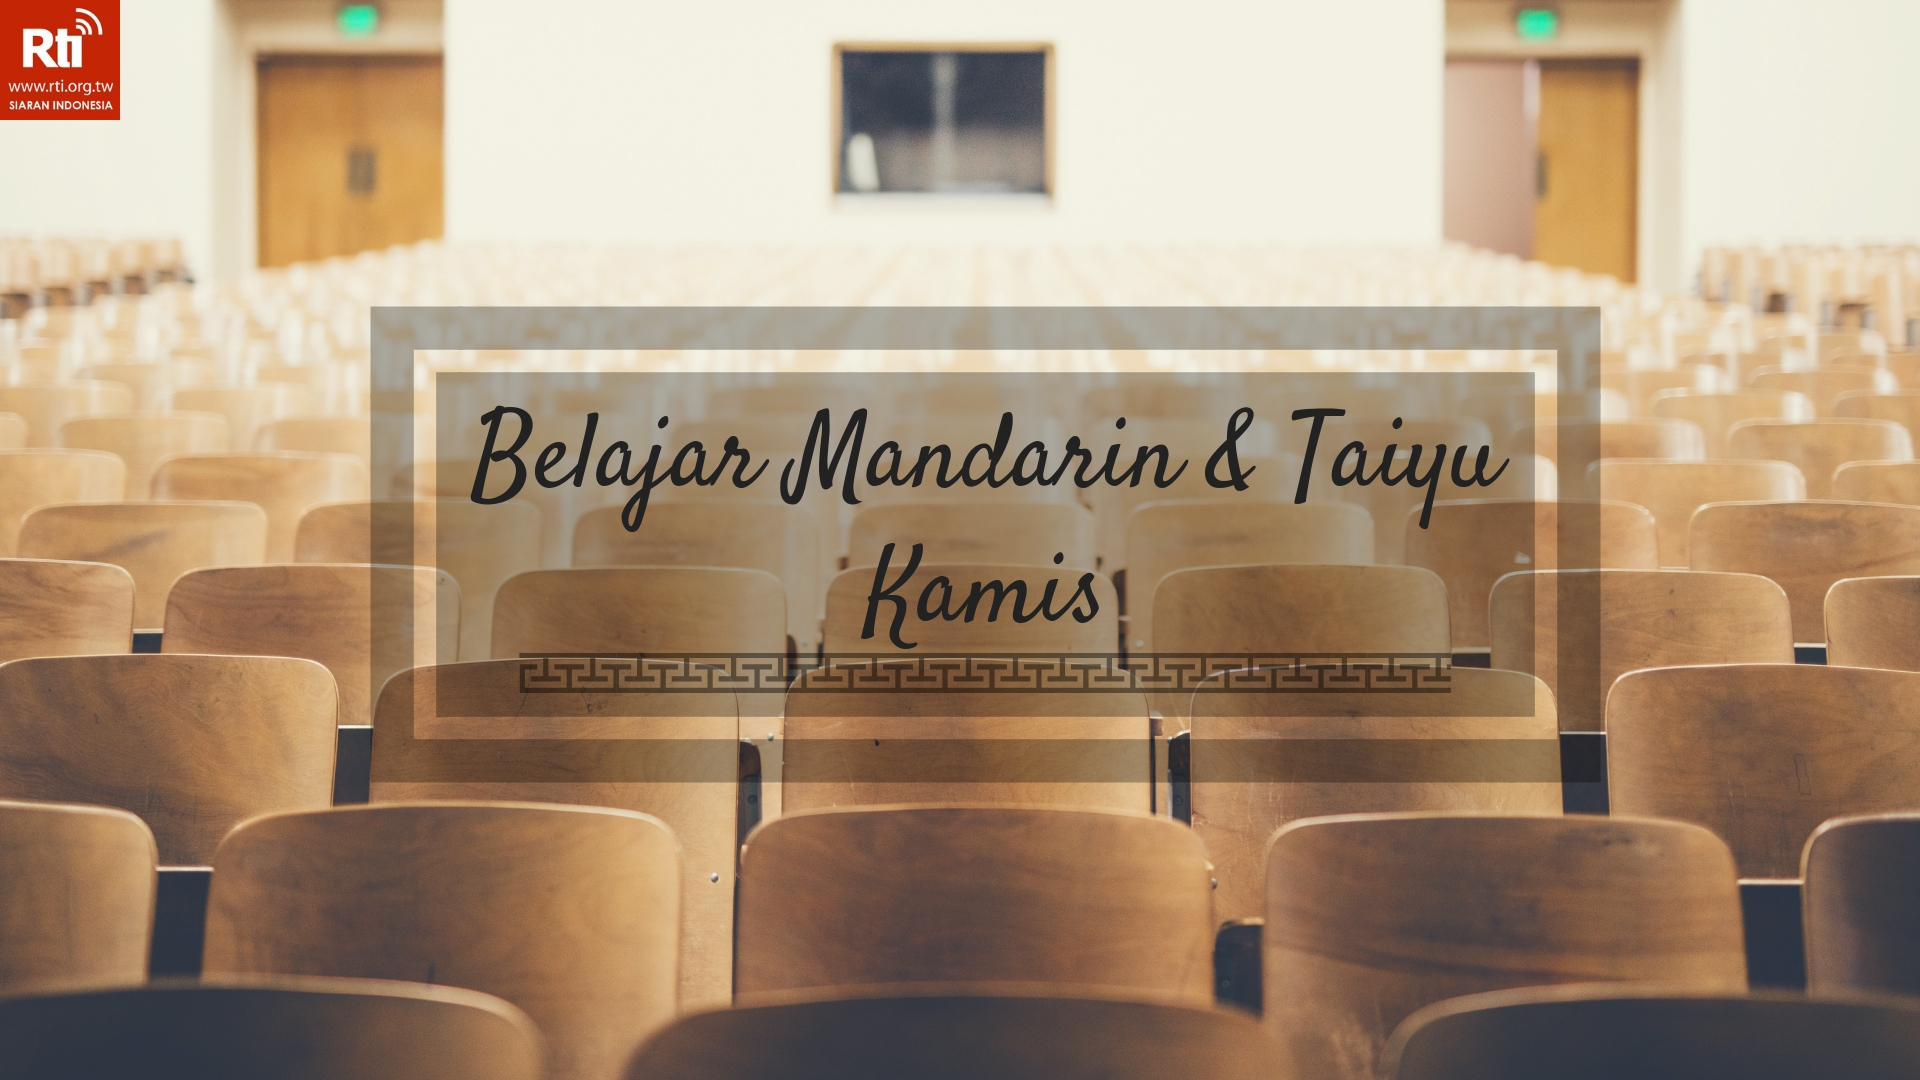 Belajar Mandarin, Taiyu dan Bahasa Indonesia